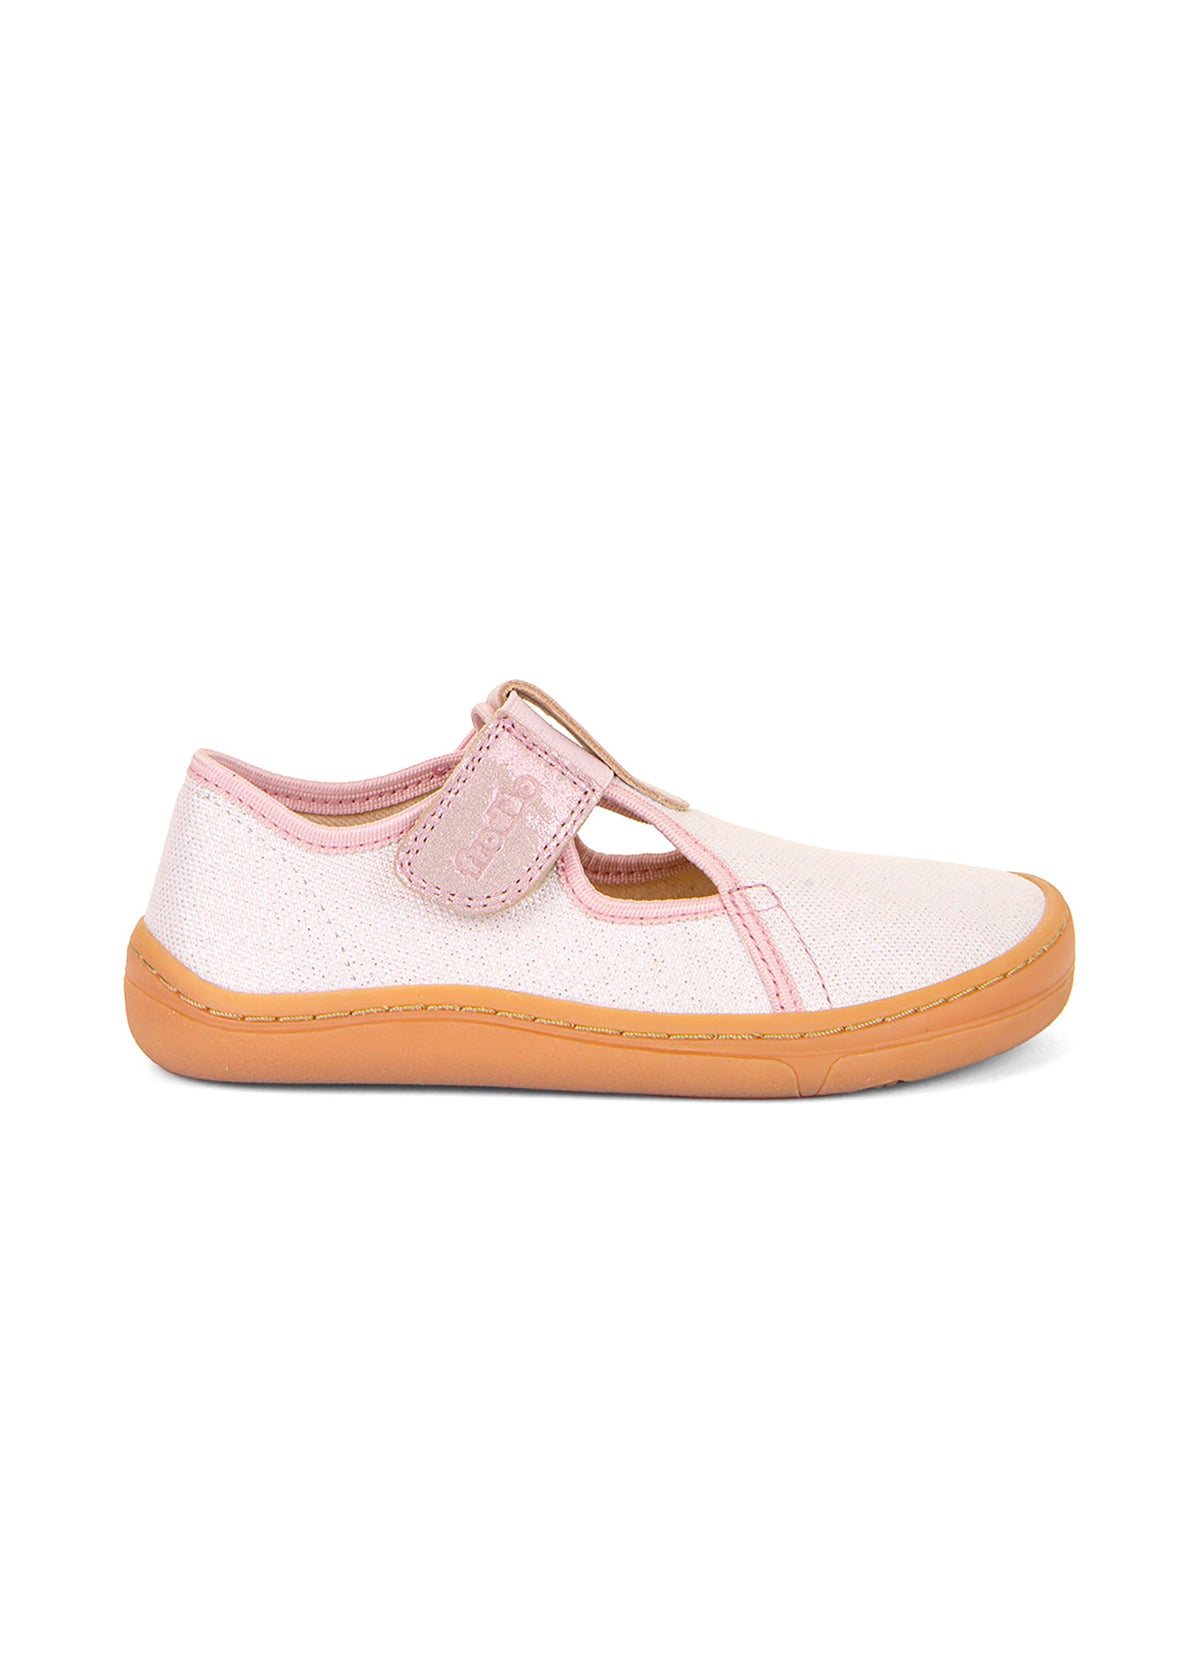 Children's barefoot sneakers - sparkling pink, velcro fastening